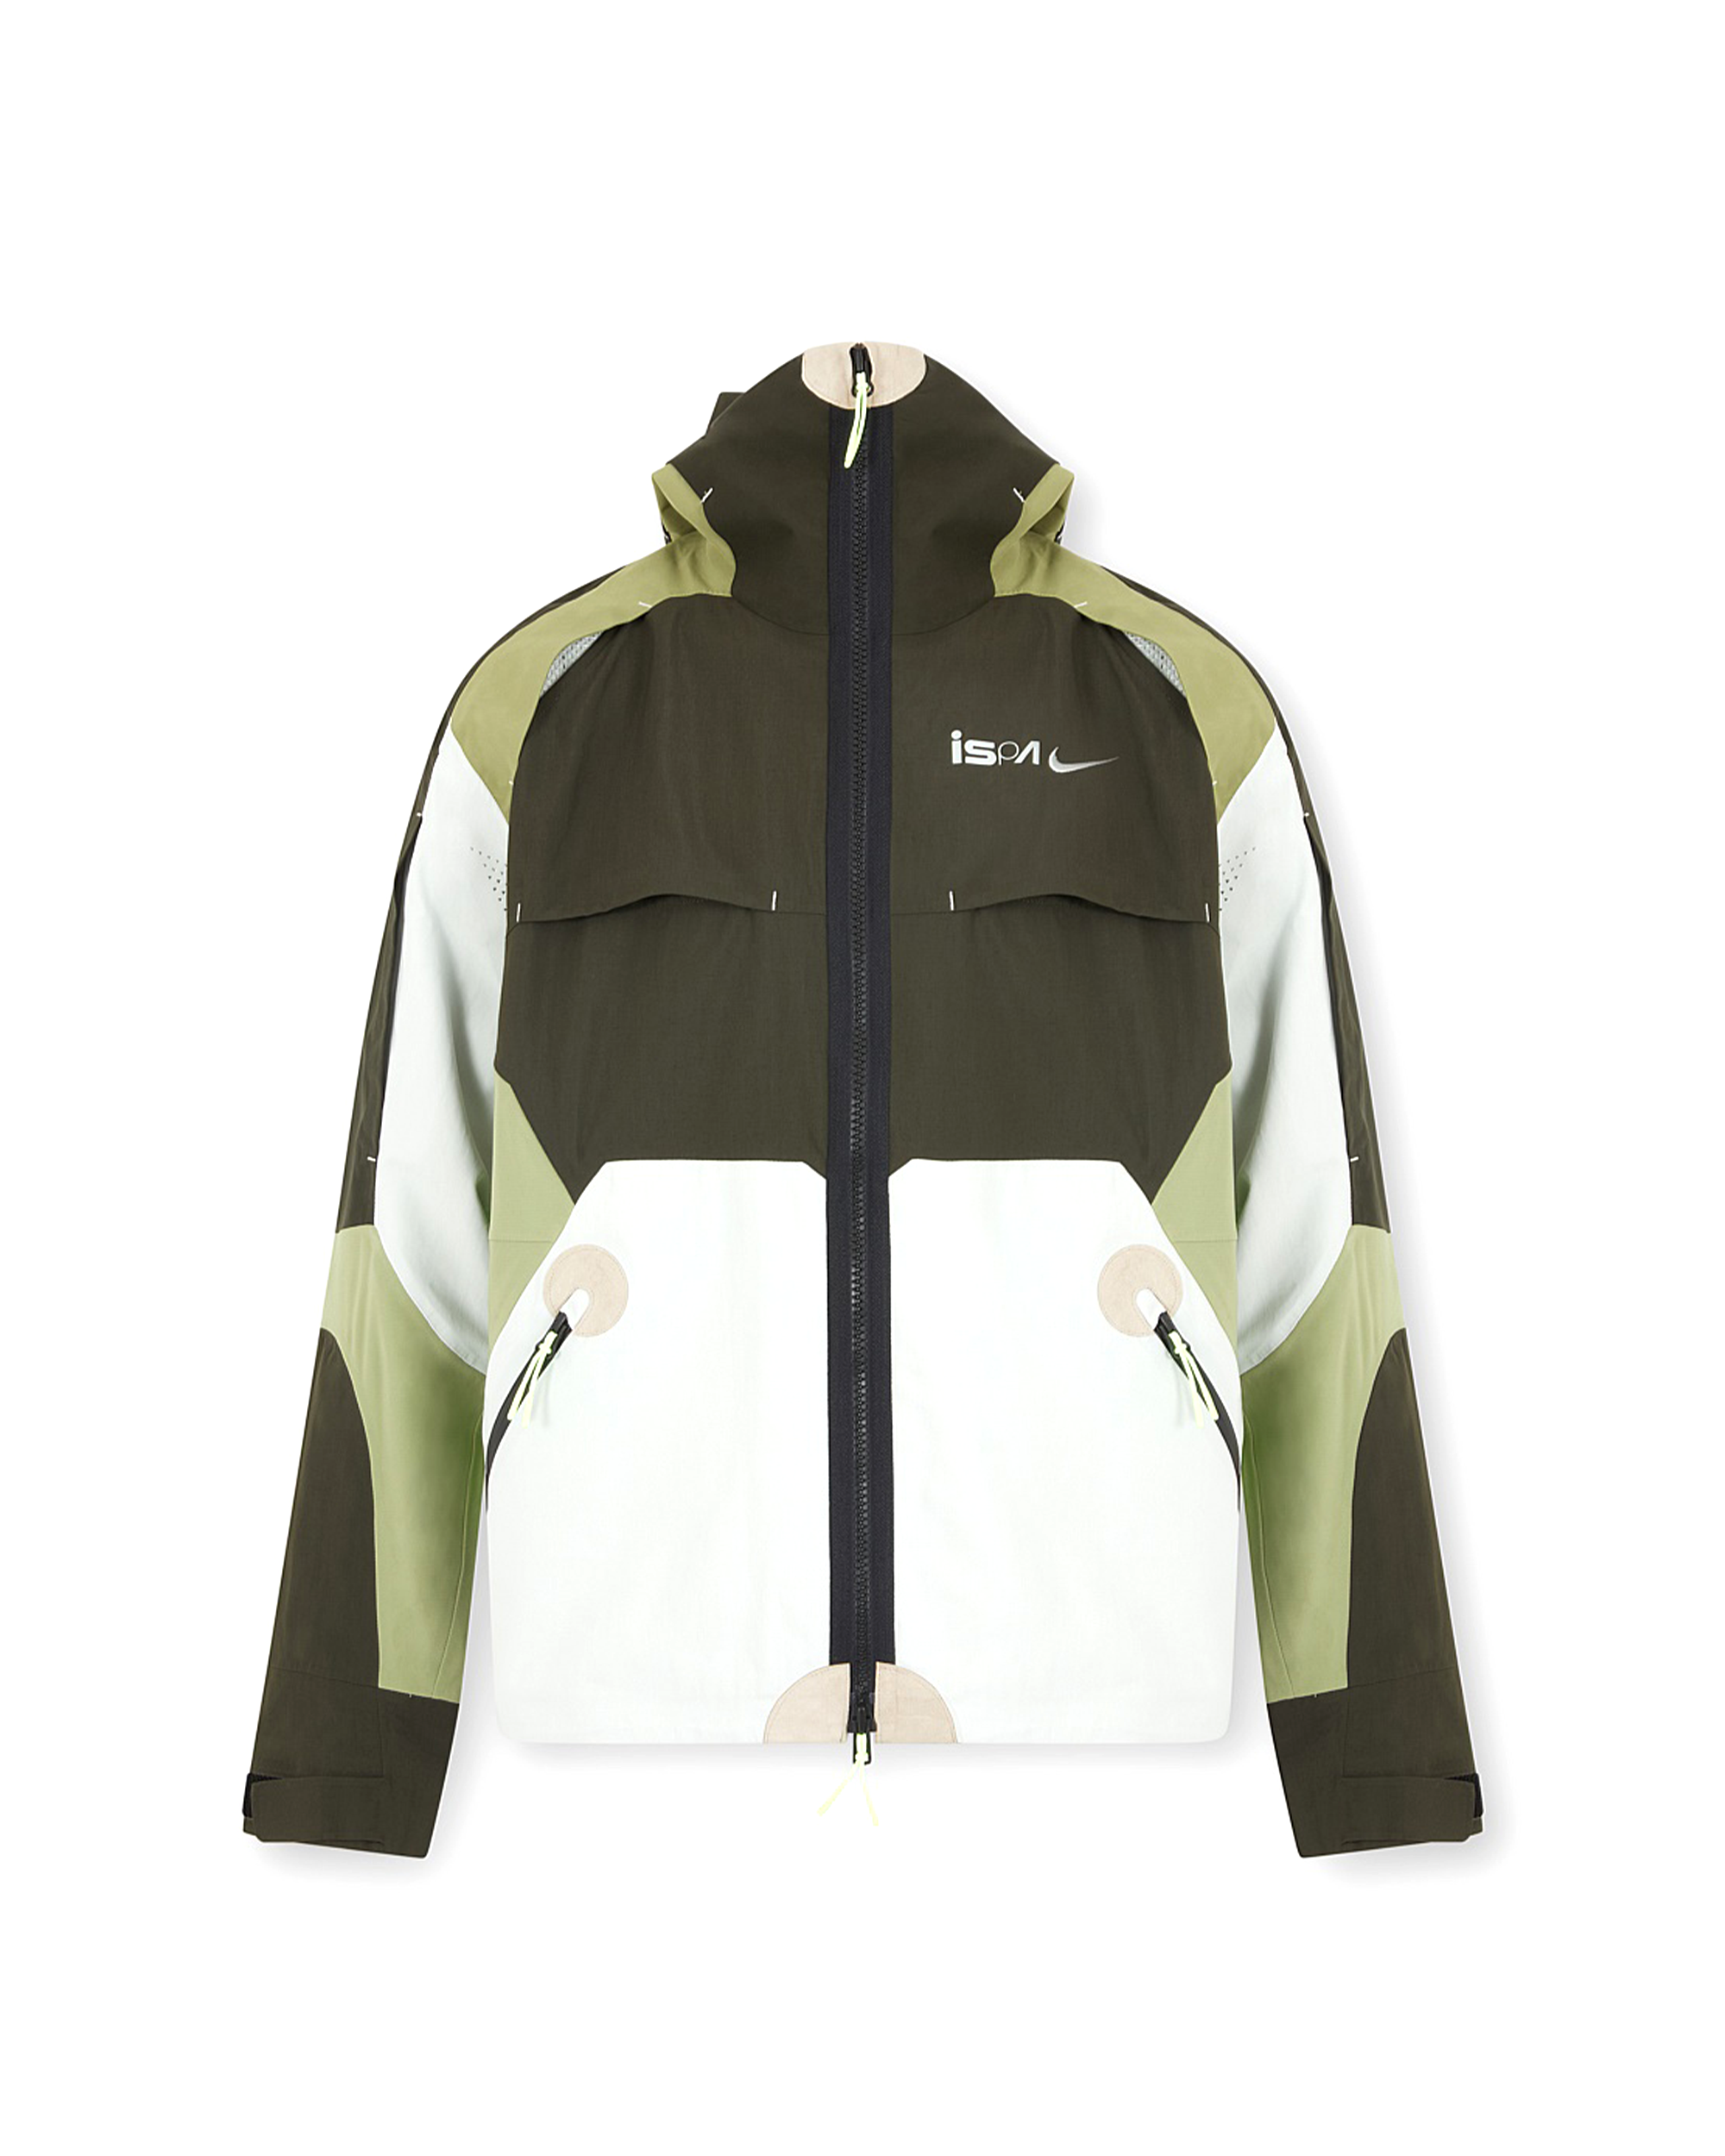 ISPA Jacket - Sequoia / Alligator / Light Silver